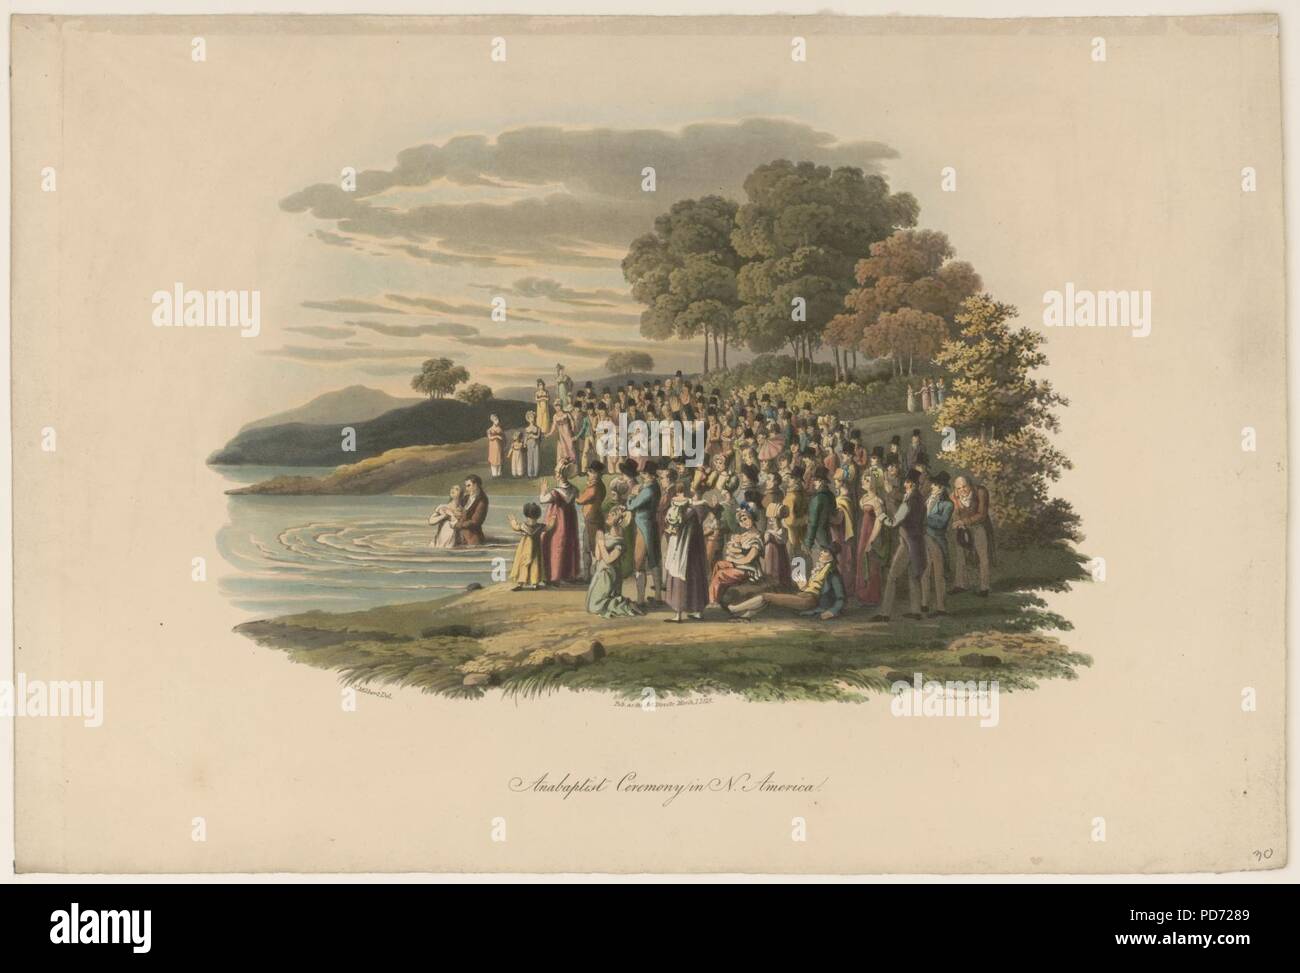 Anabaptist ceremony in N. America - J. Milbert del. ; M. Dubourg sculp. Stock Photo